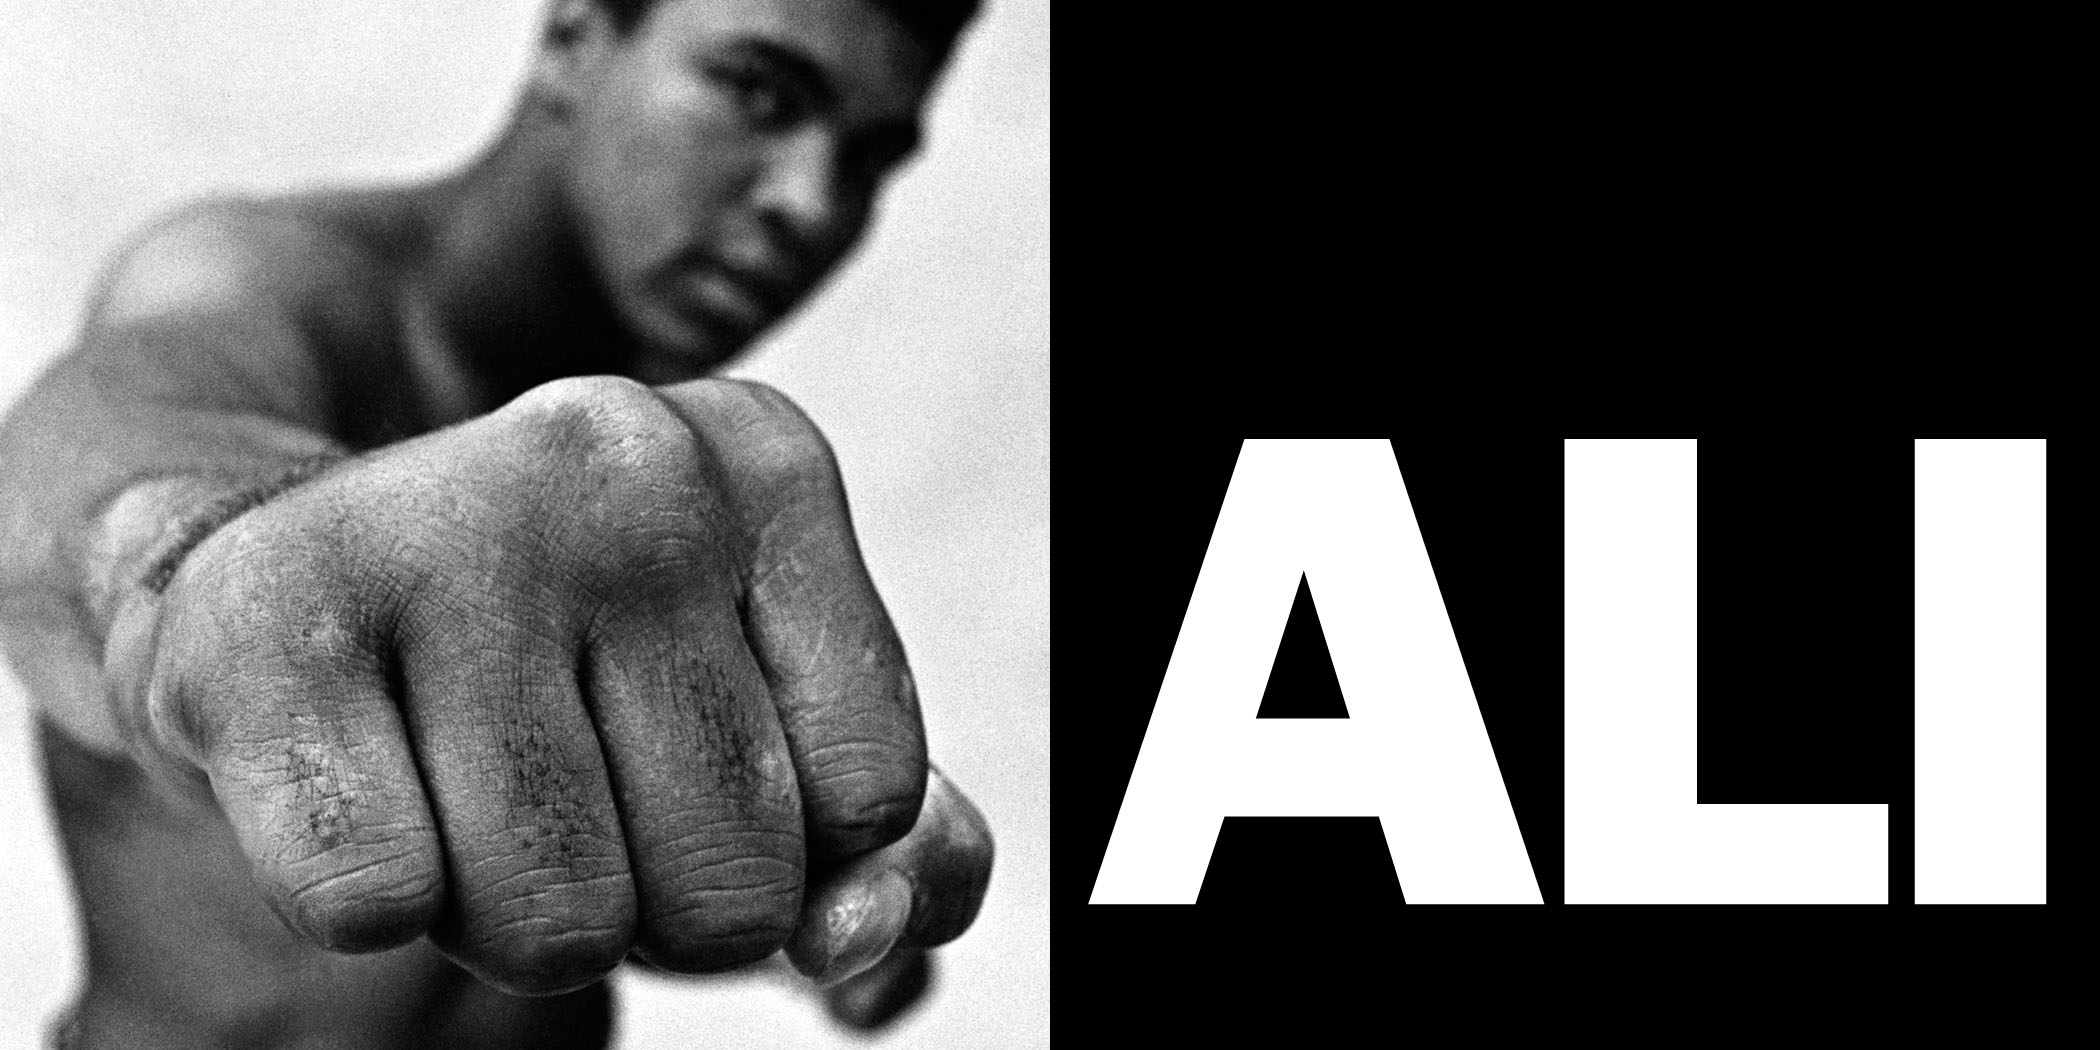 Muhammad Ali Dead: Legendary Boxer Was 74